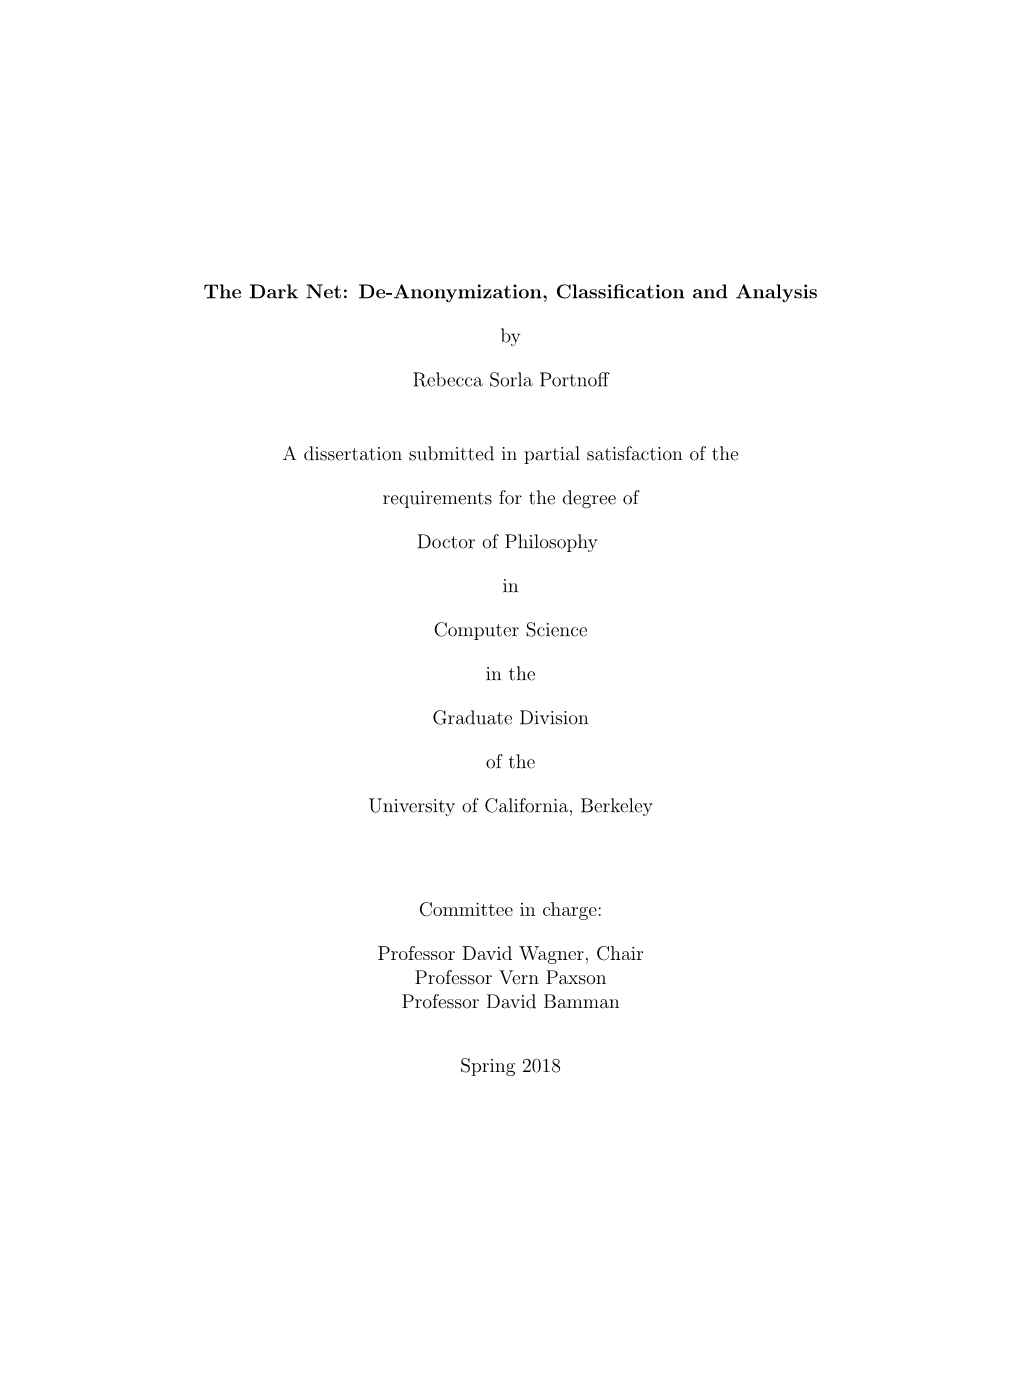 U. C. Berkeley Dissertation